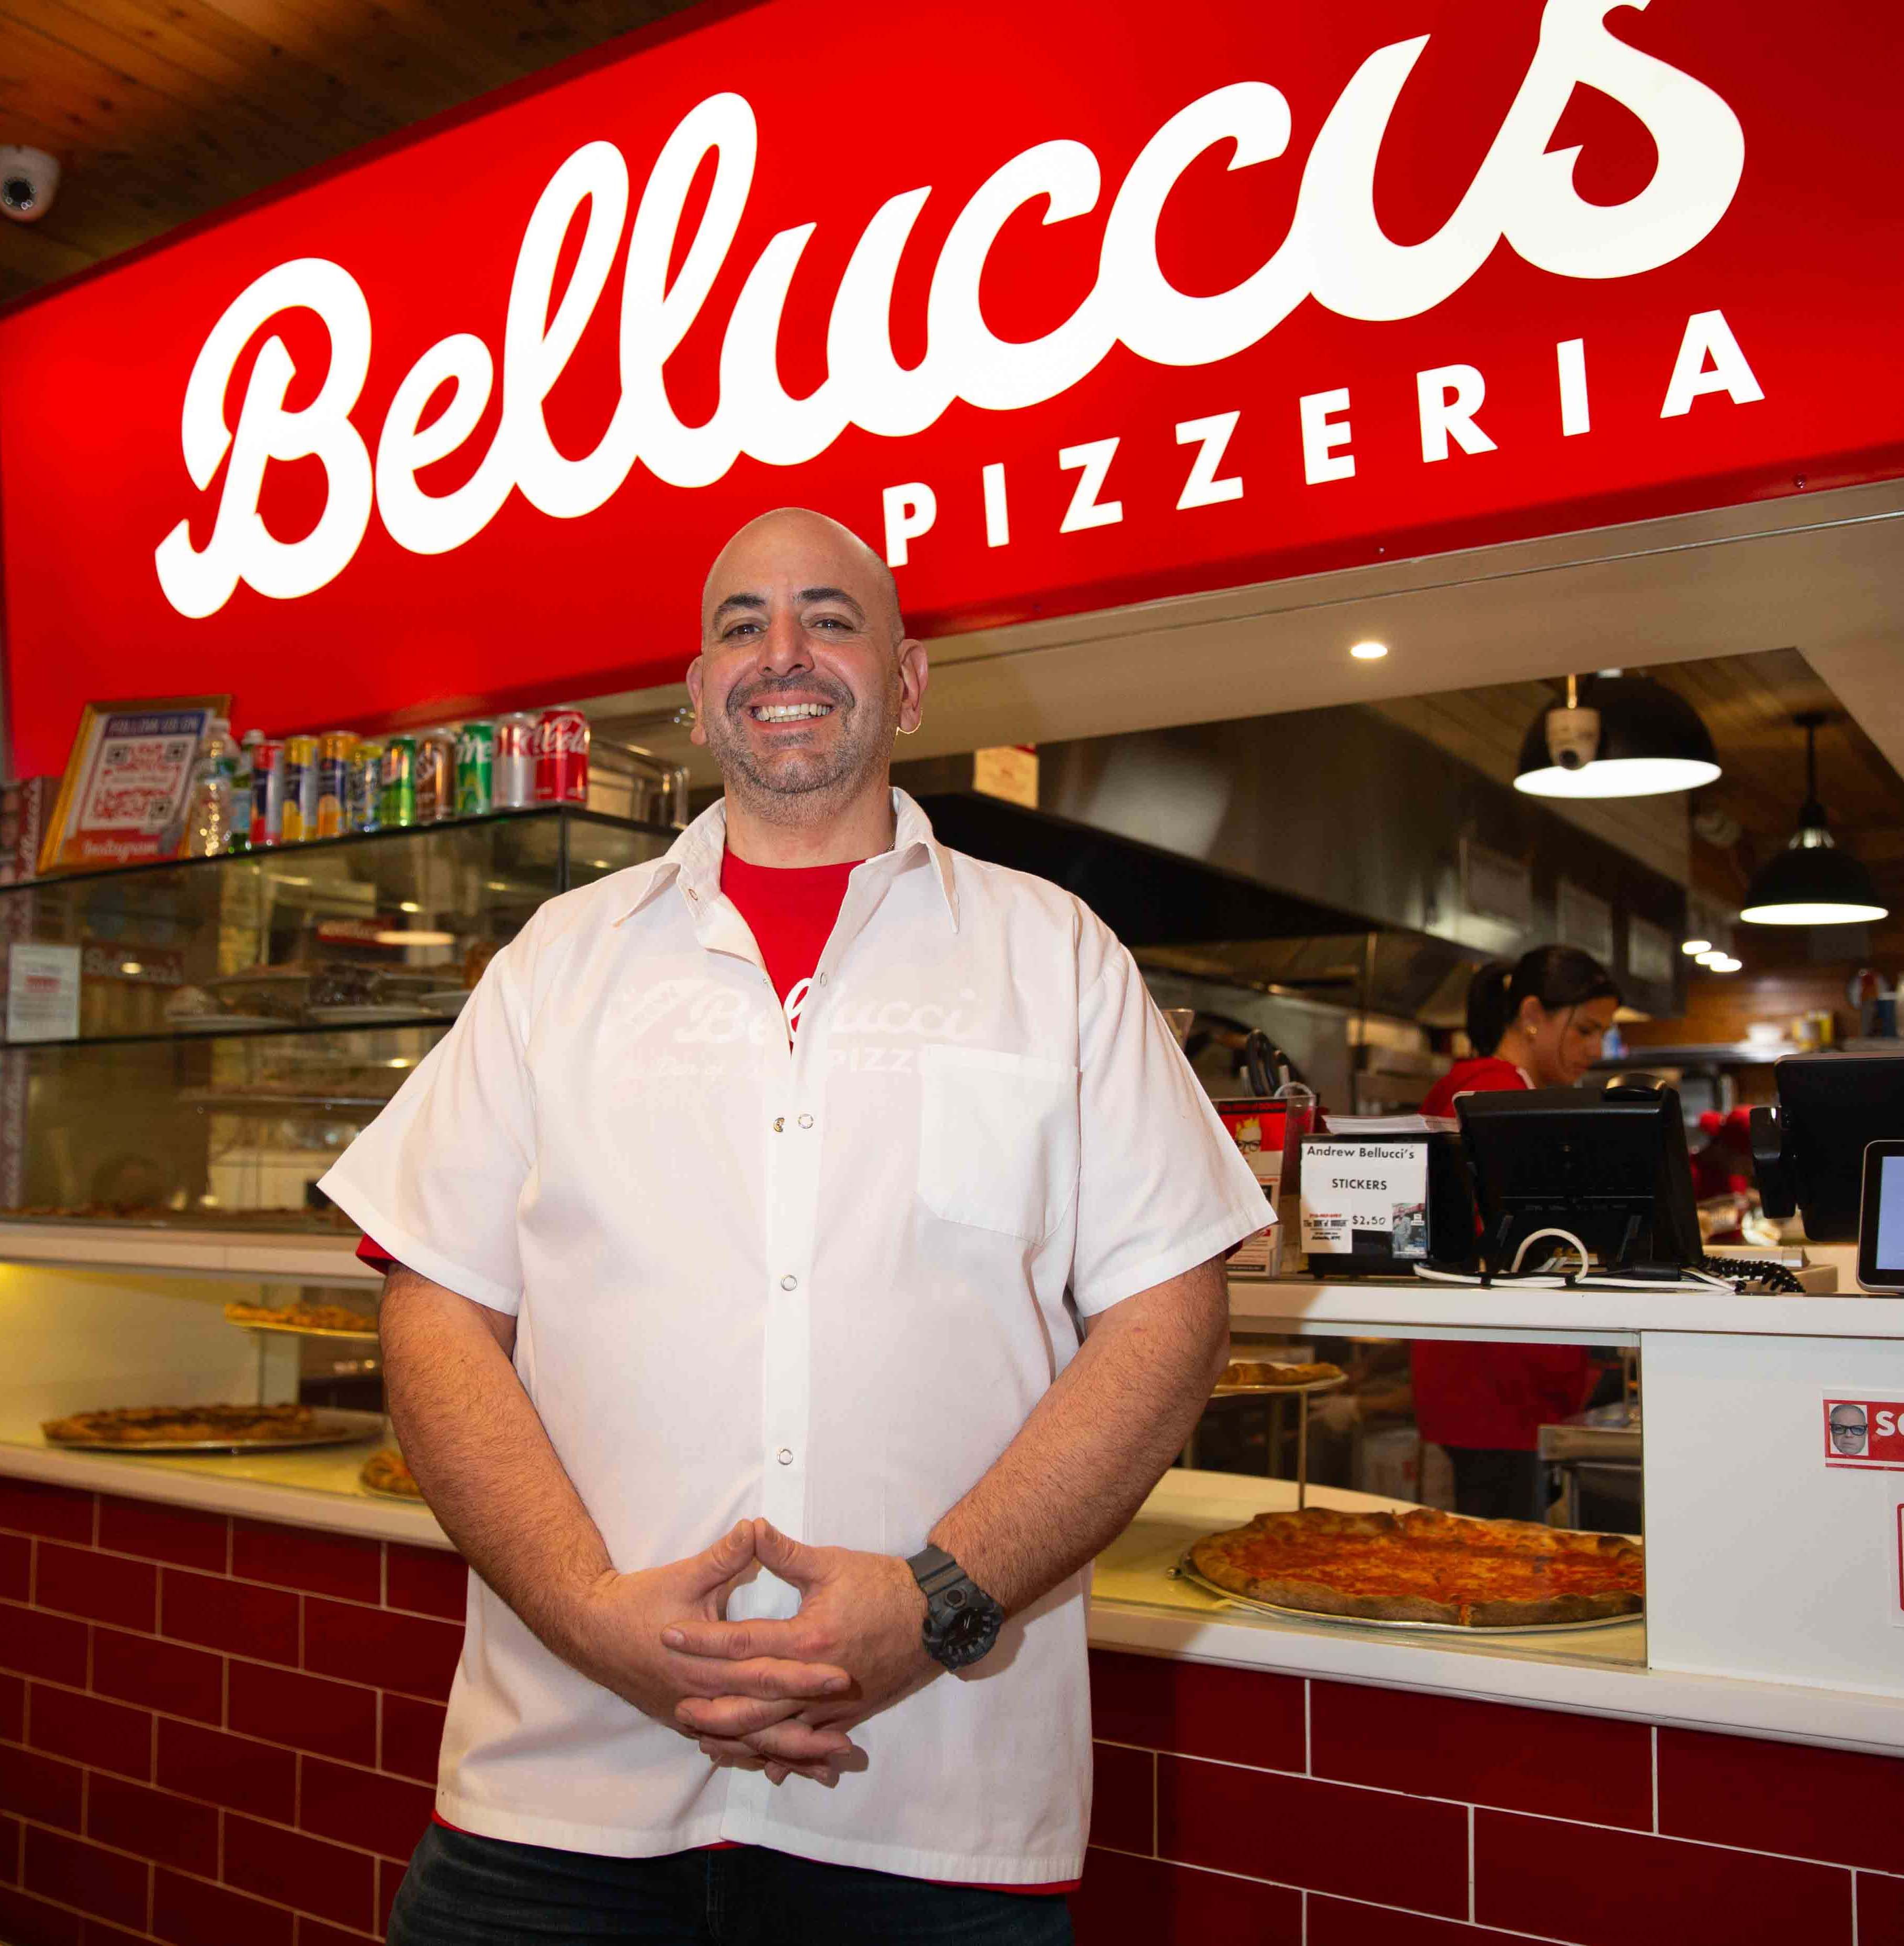 Andrew Belluzzi Pizzeria